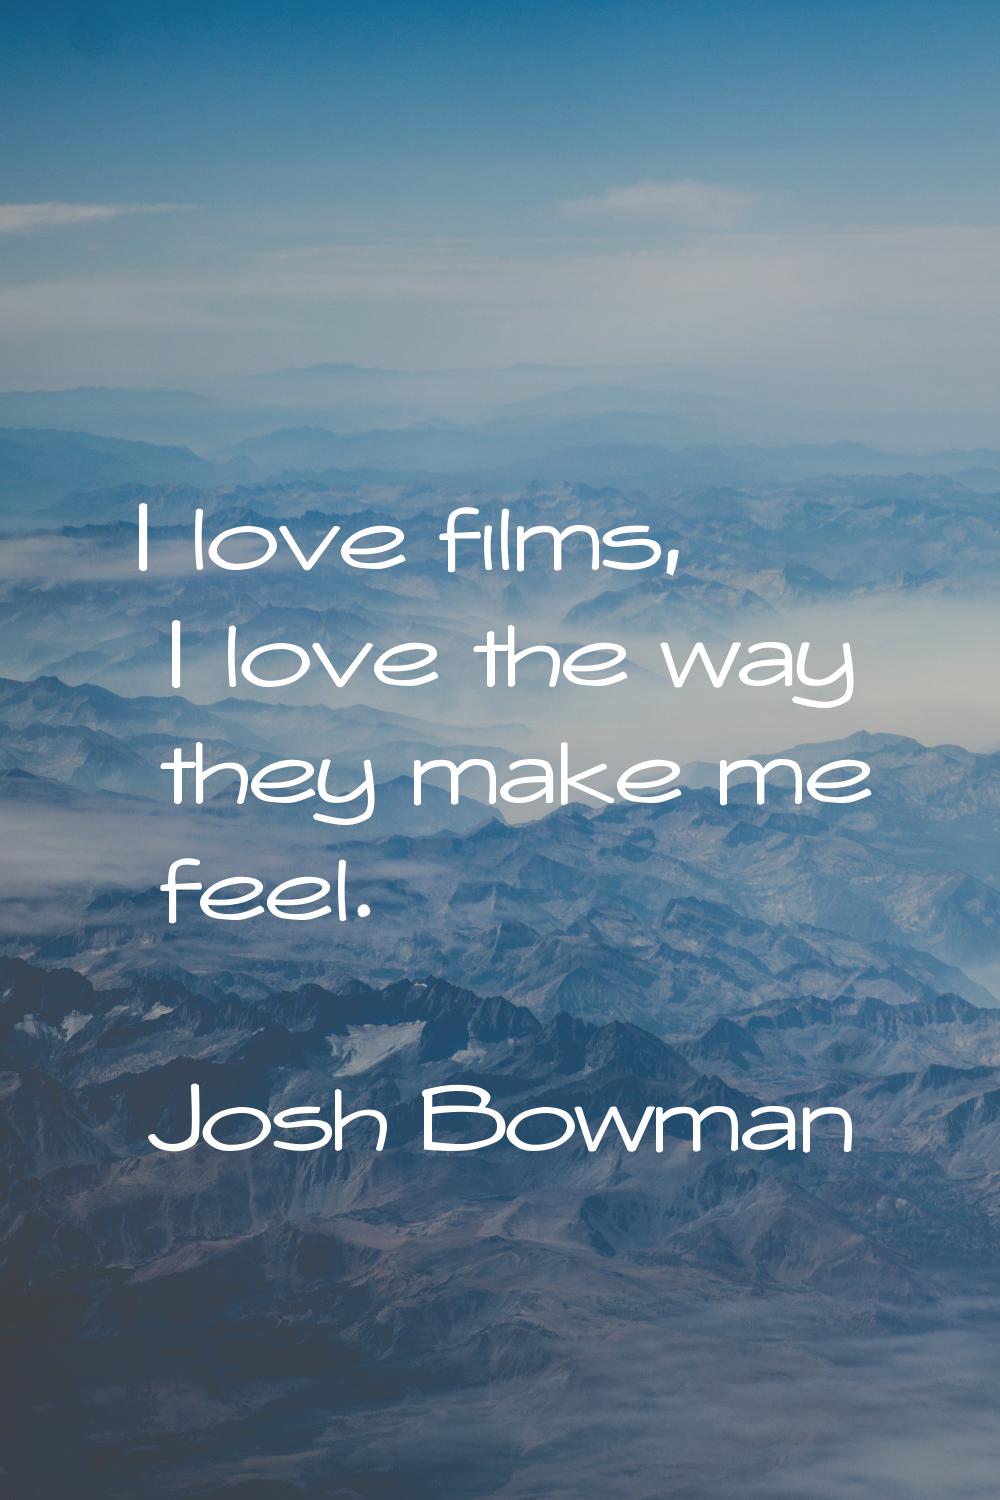 I love films, I love the way they make me feel.